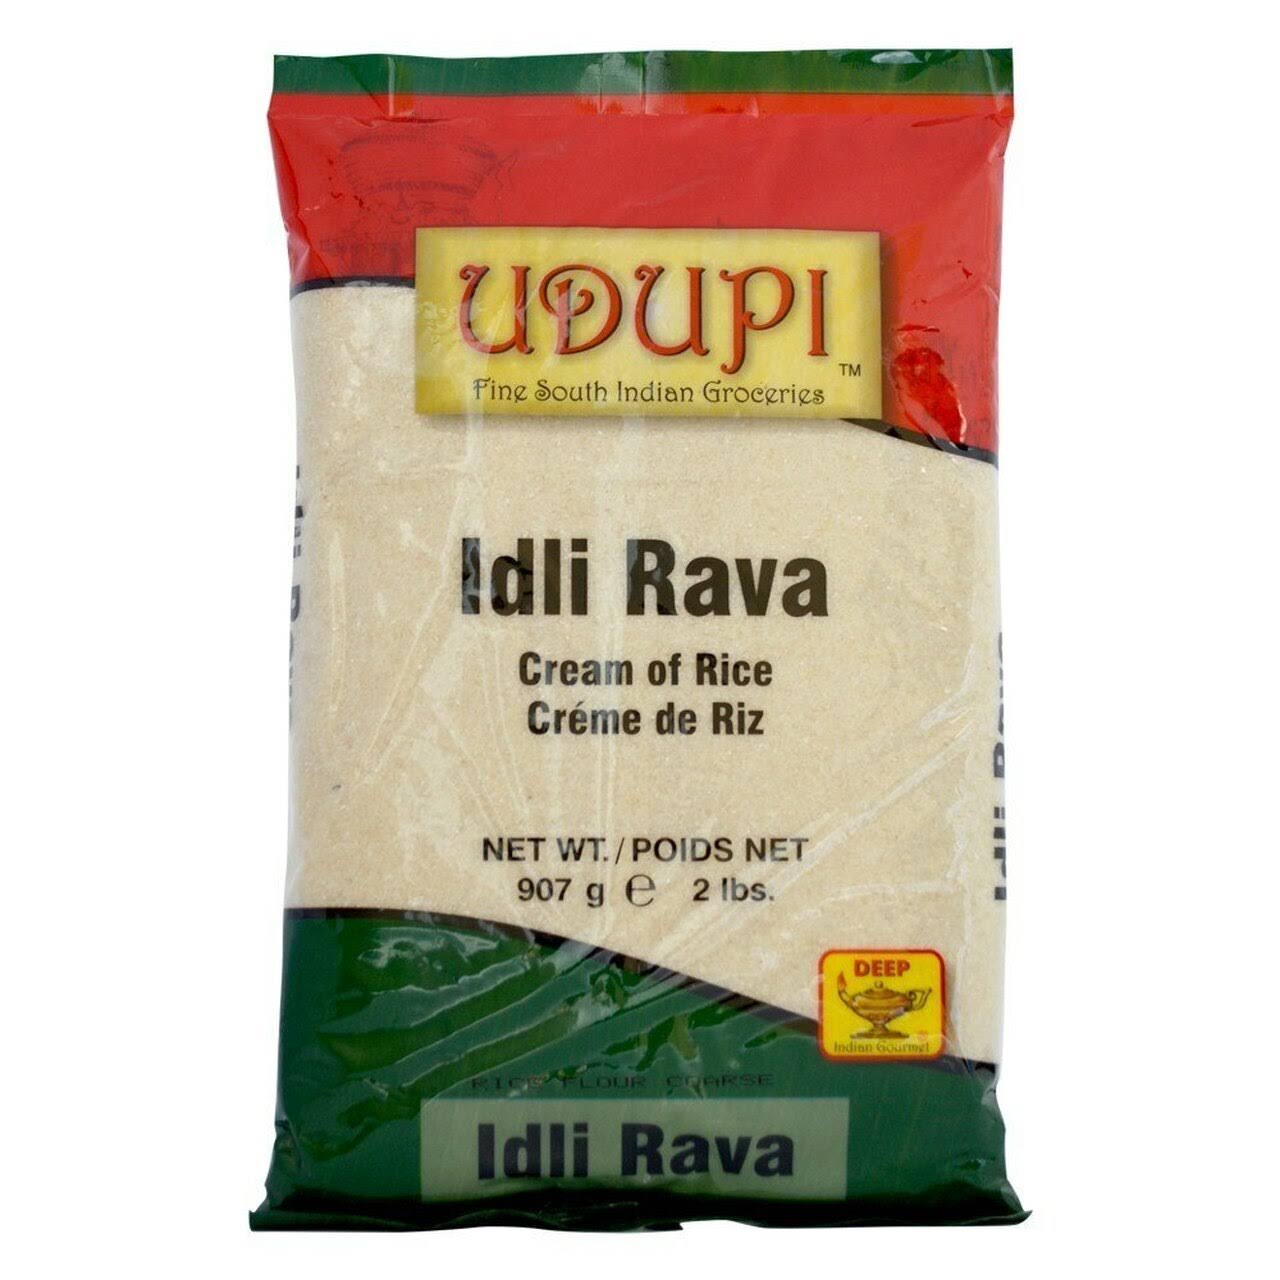 Deep Indian Kitchen Udupi Idli Rava Cream of Rice - 2.0 lb